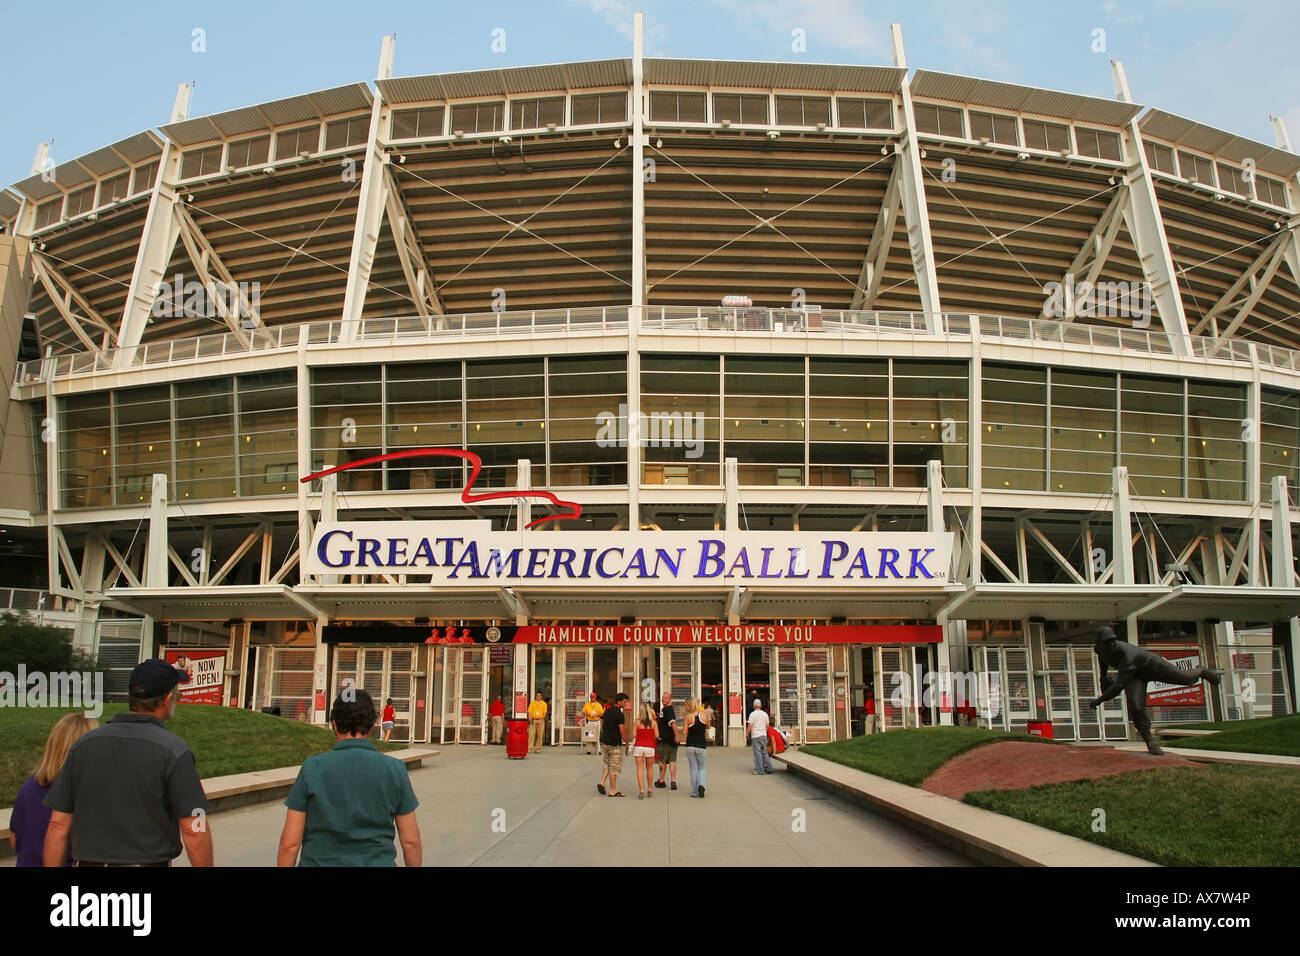 Great American Ball Park Cincinnati Ohio Cincinnati Reds baseball team home  field Stock Photo - Alamy